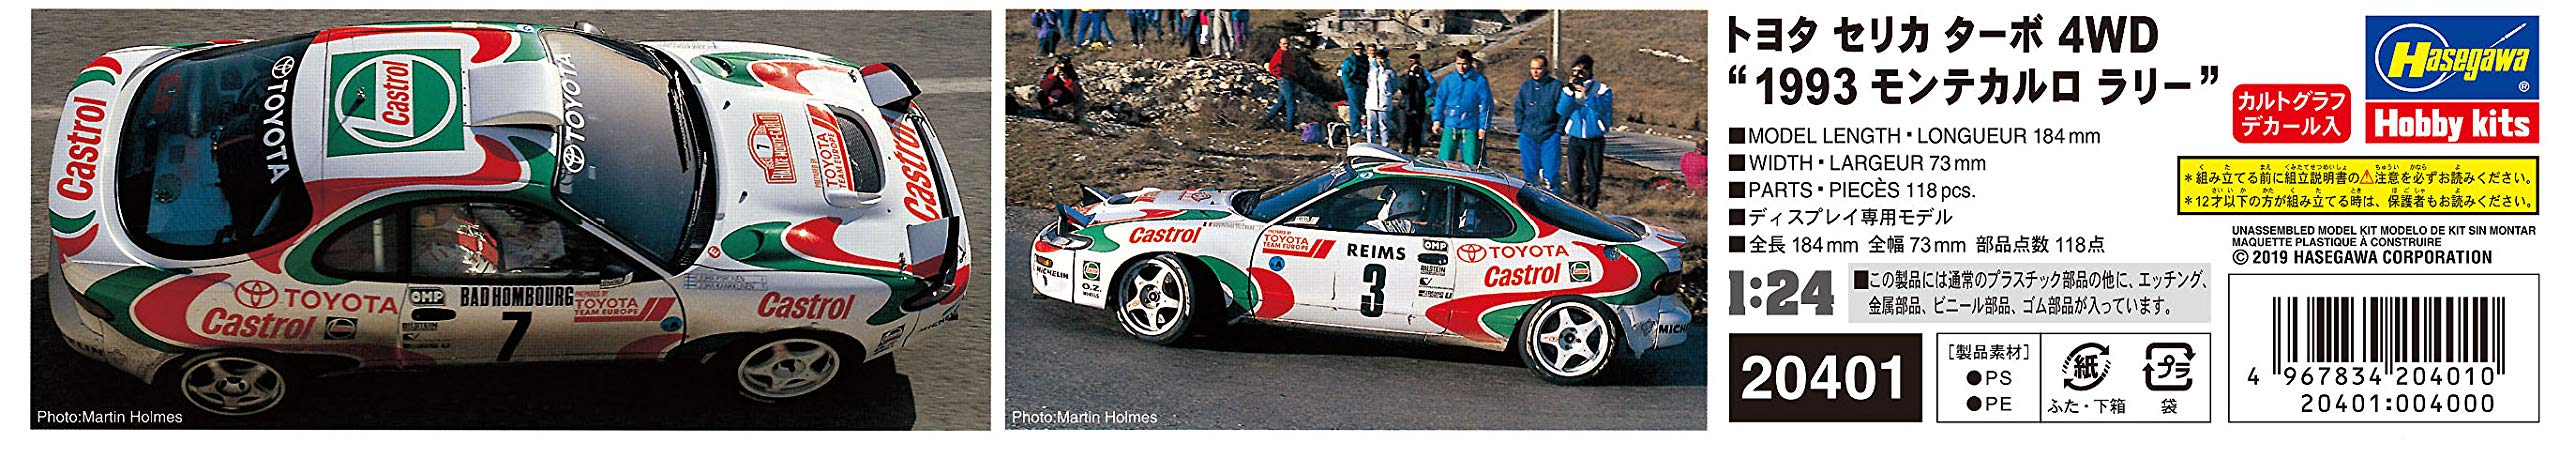 HASEGAWA 20401 Toyota Celica Turbo 4Wd 1993 Monte Carlo Rallye 1/24 Kit Échelle